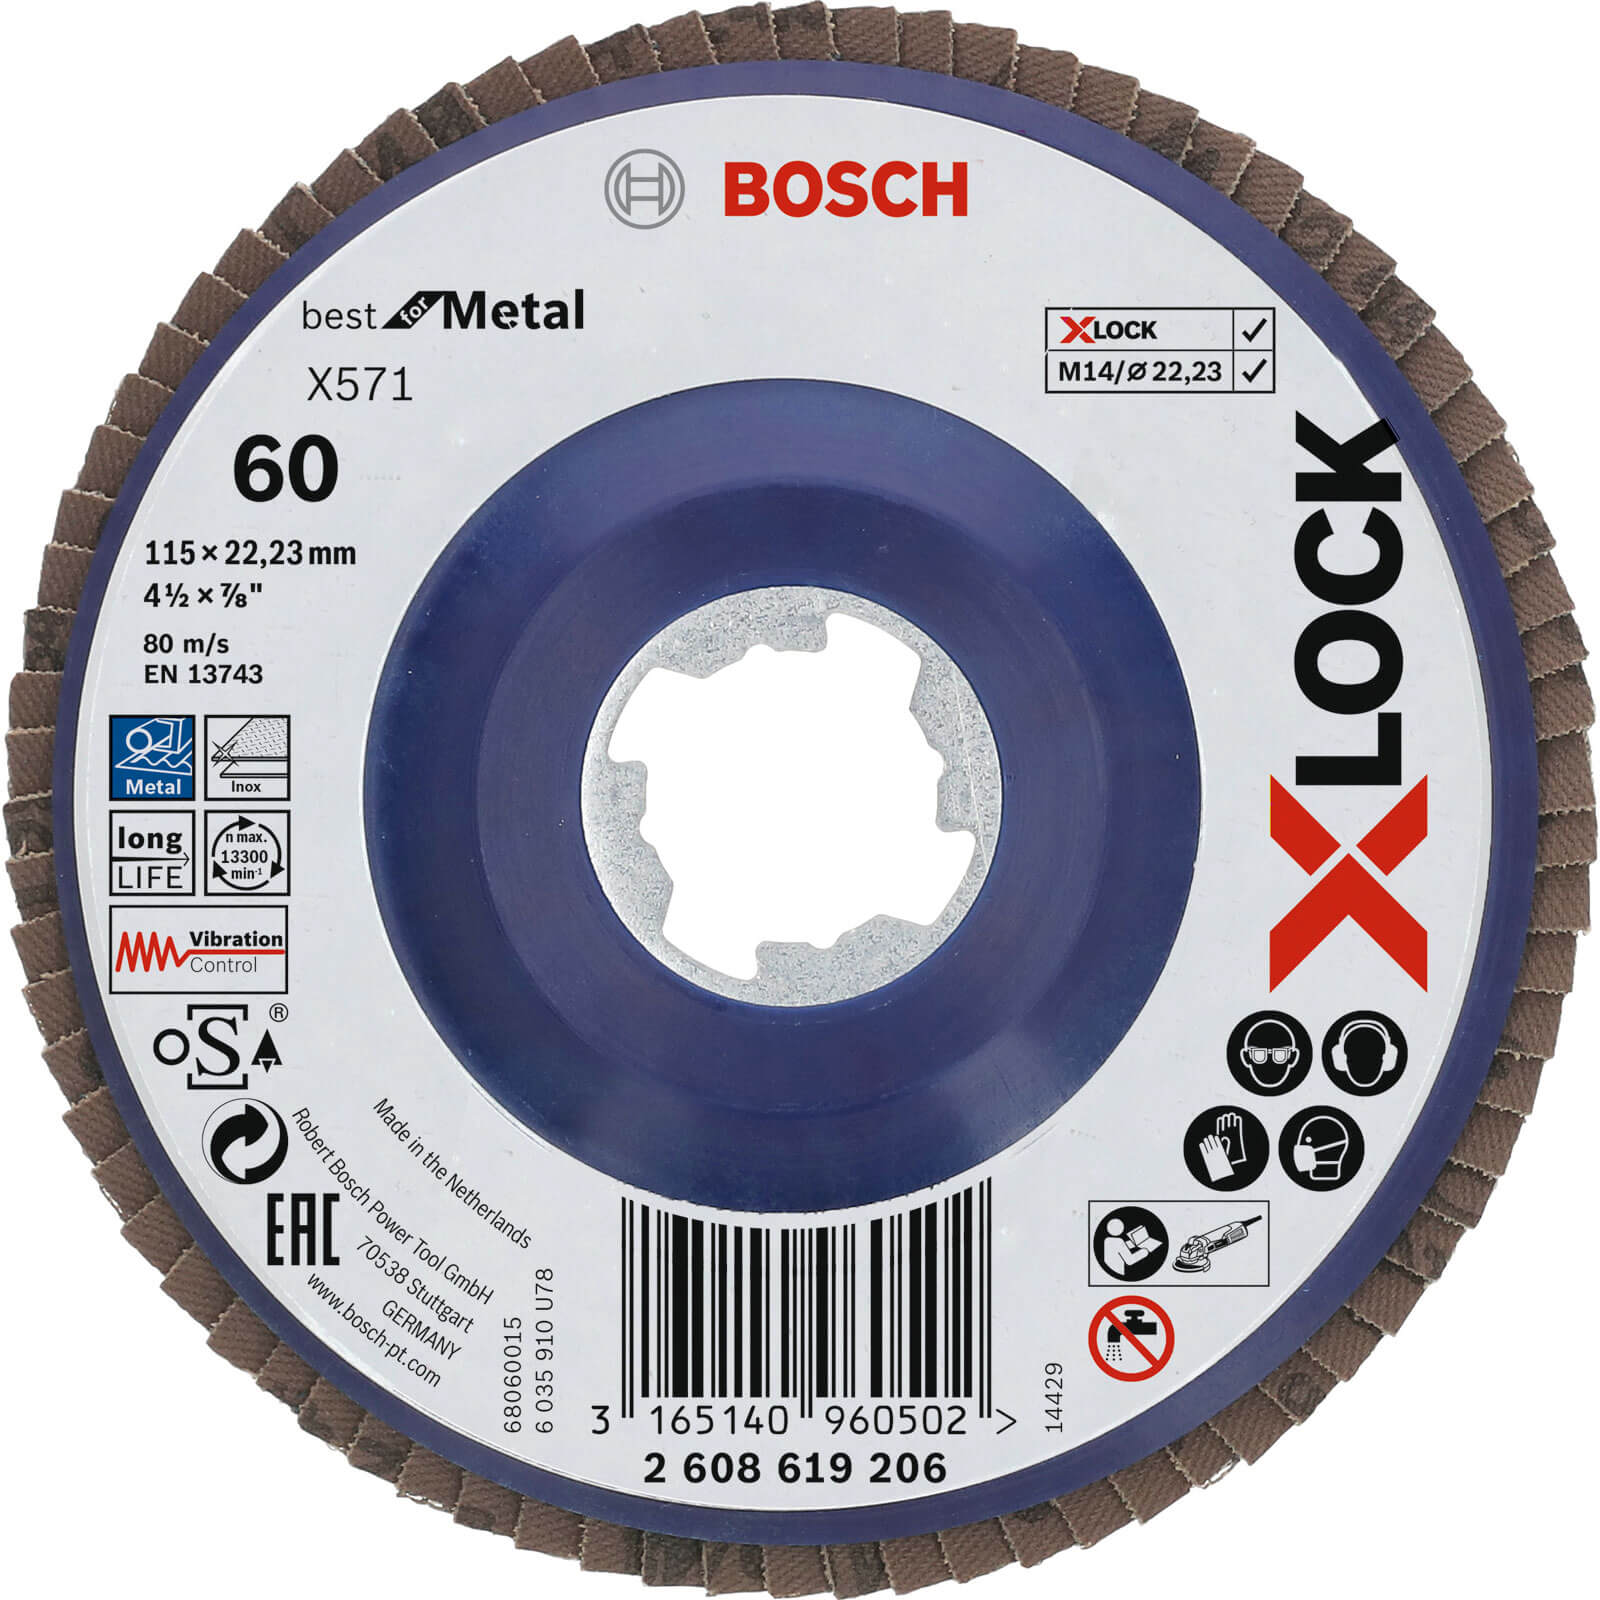 Image of Bosch X Lock Zirconium Abrasive Straight Flap Disc 115mm 60g Pack of 1